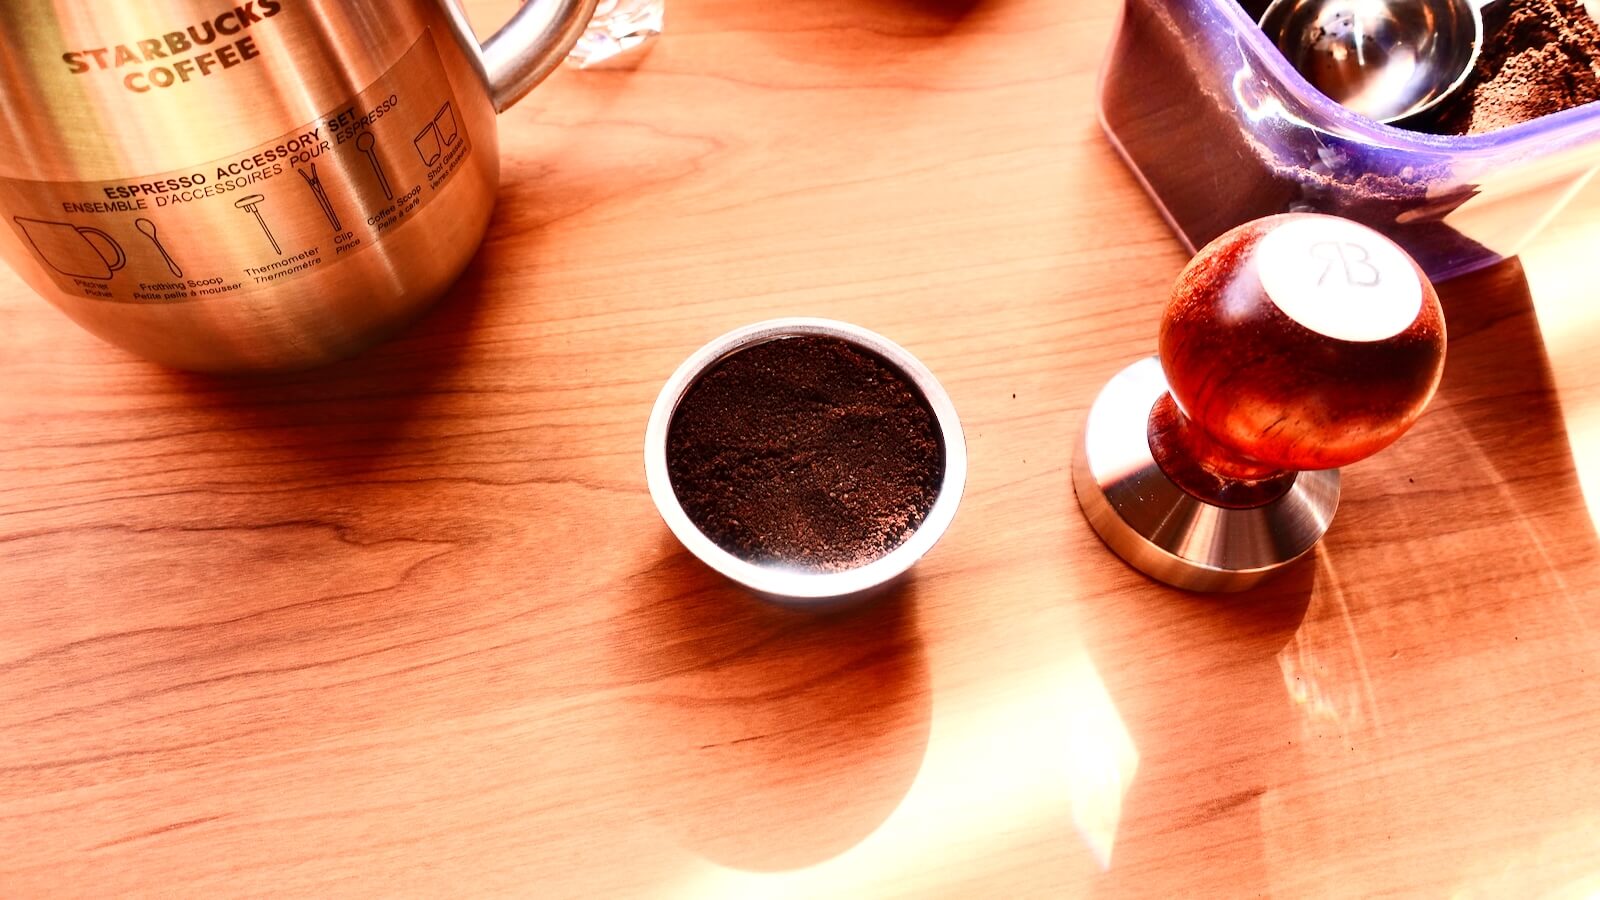 Espresso machine included Photo of coffee powder spread in the filter basket